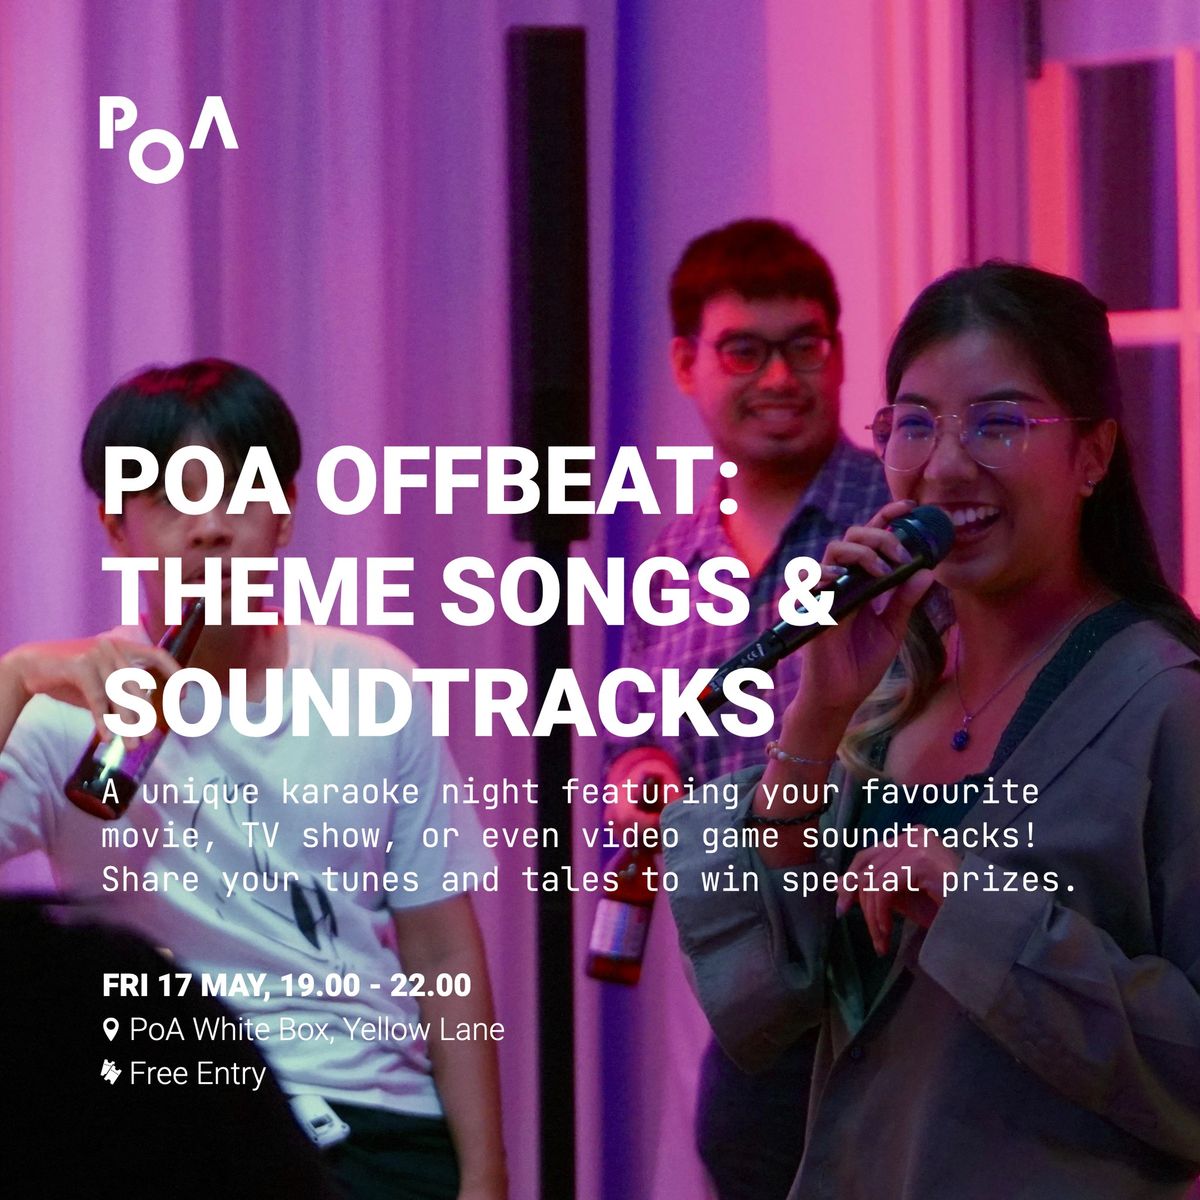 POA OFFBEAT: THEME SONGS & SOUNDTRACKS